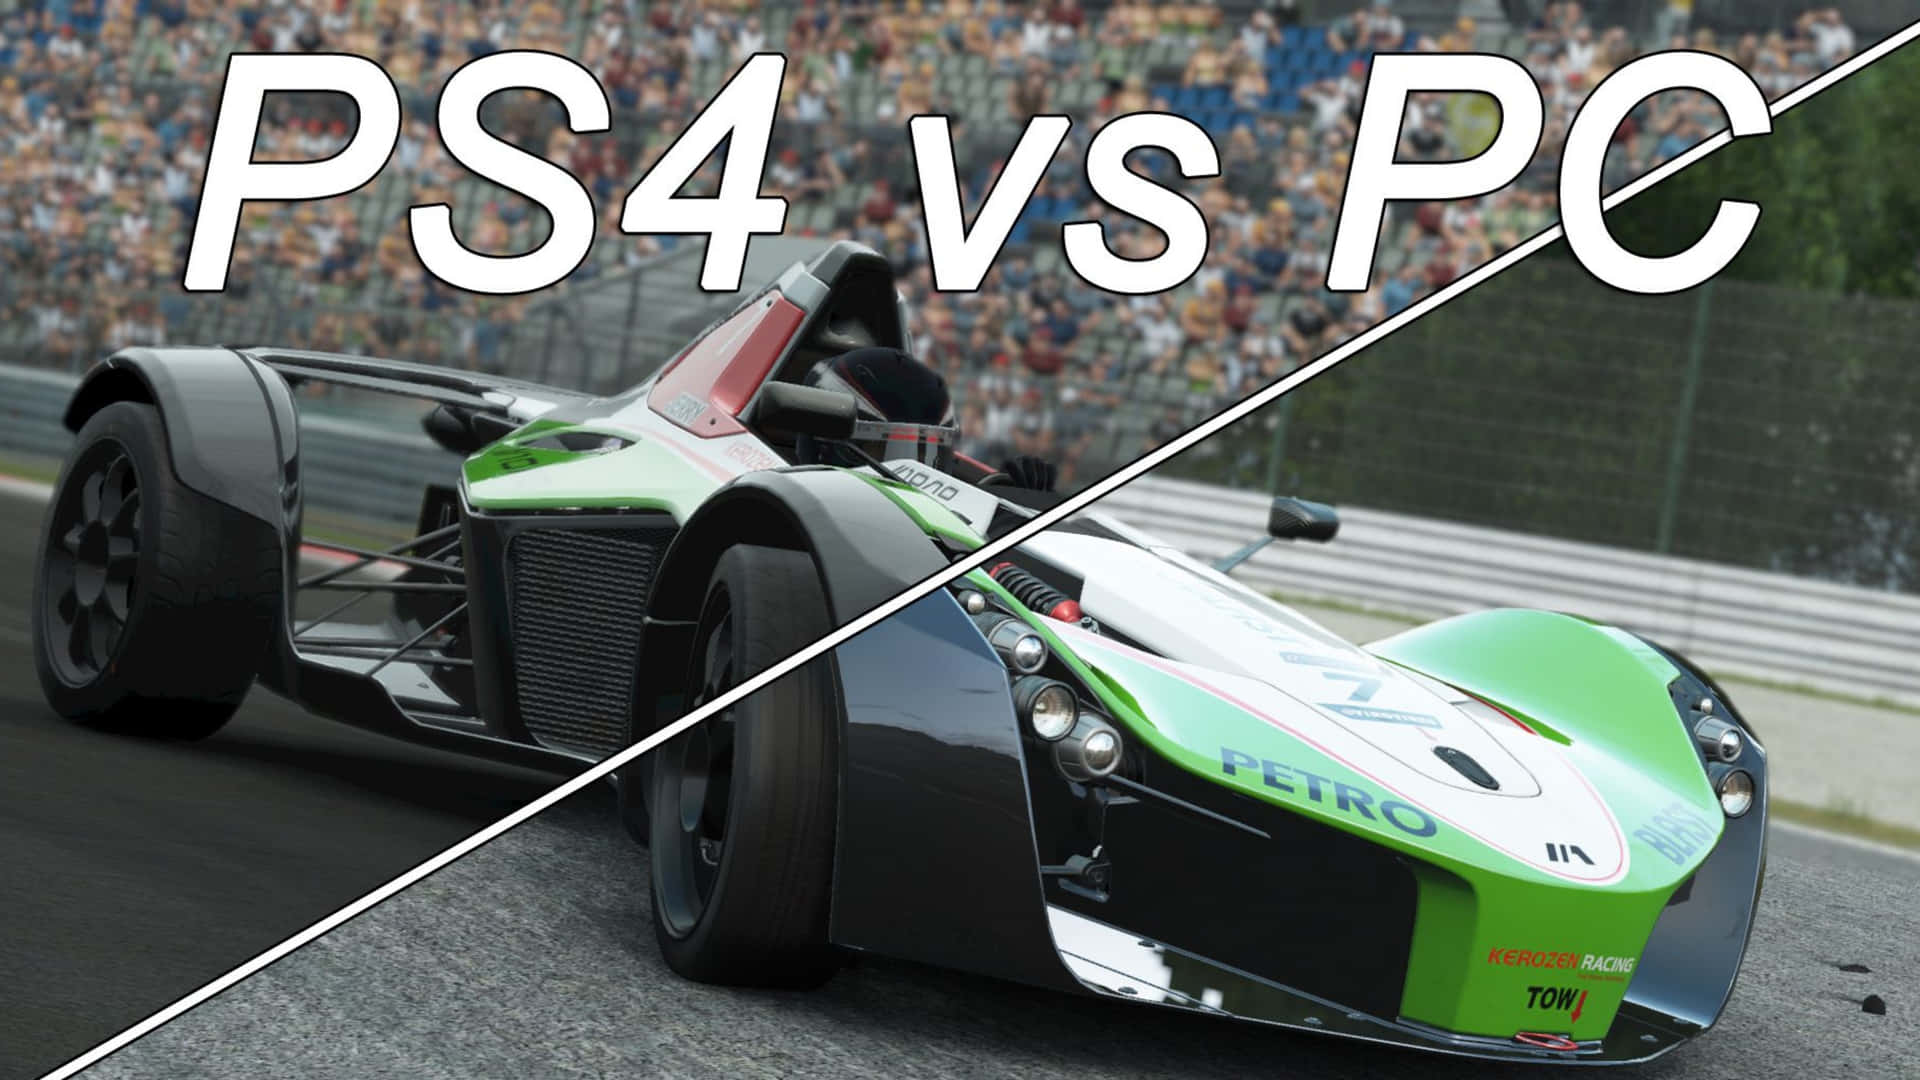 4k Project Cars PS4 VS PC Comparison Background